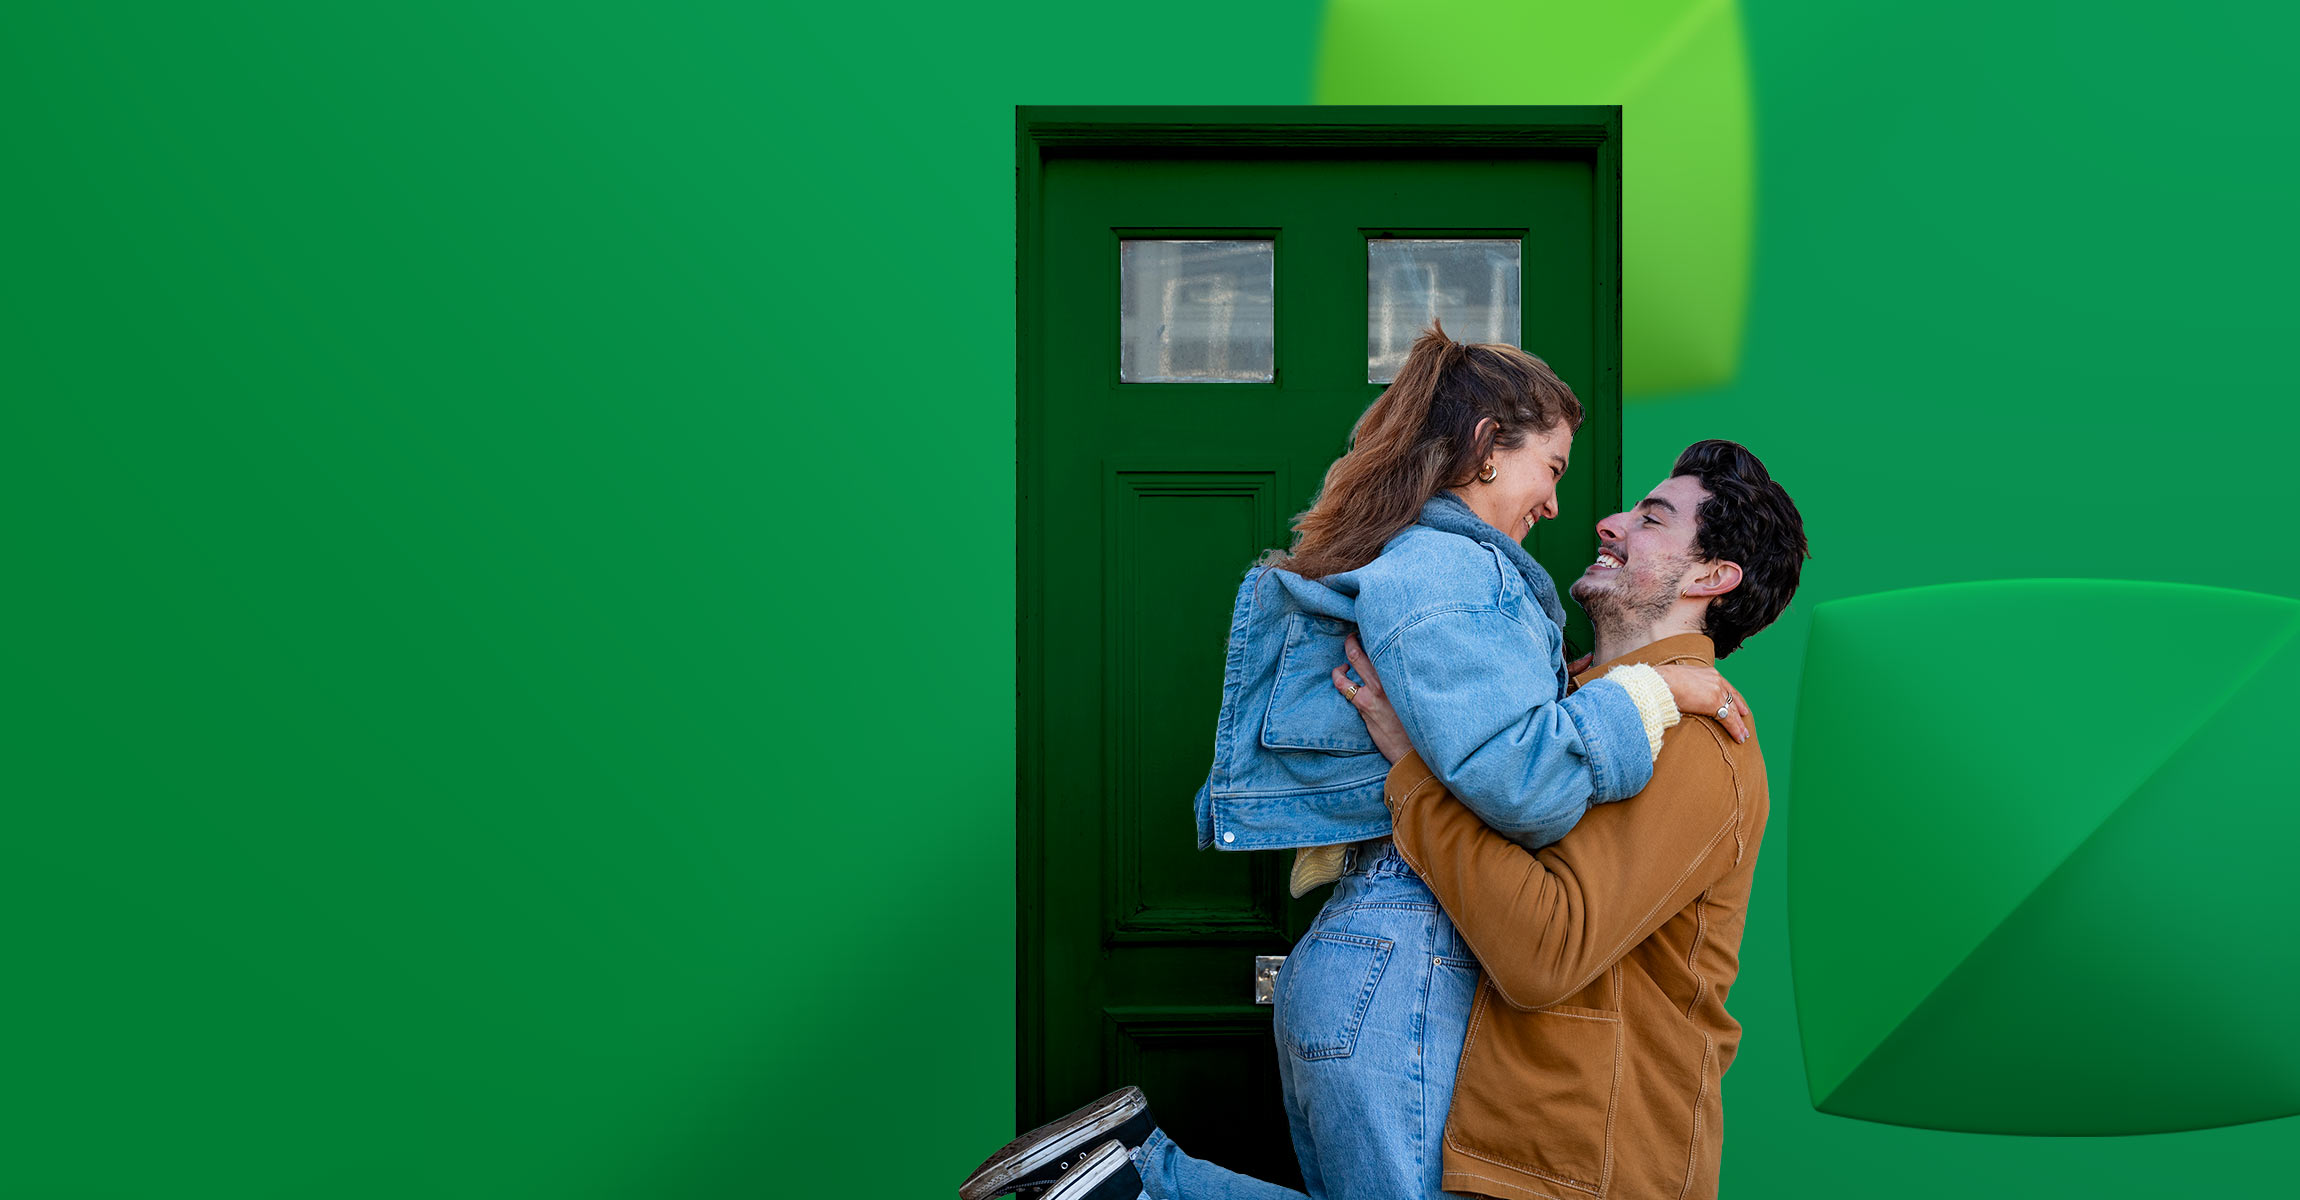 Man and woman next to green door